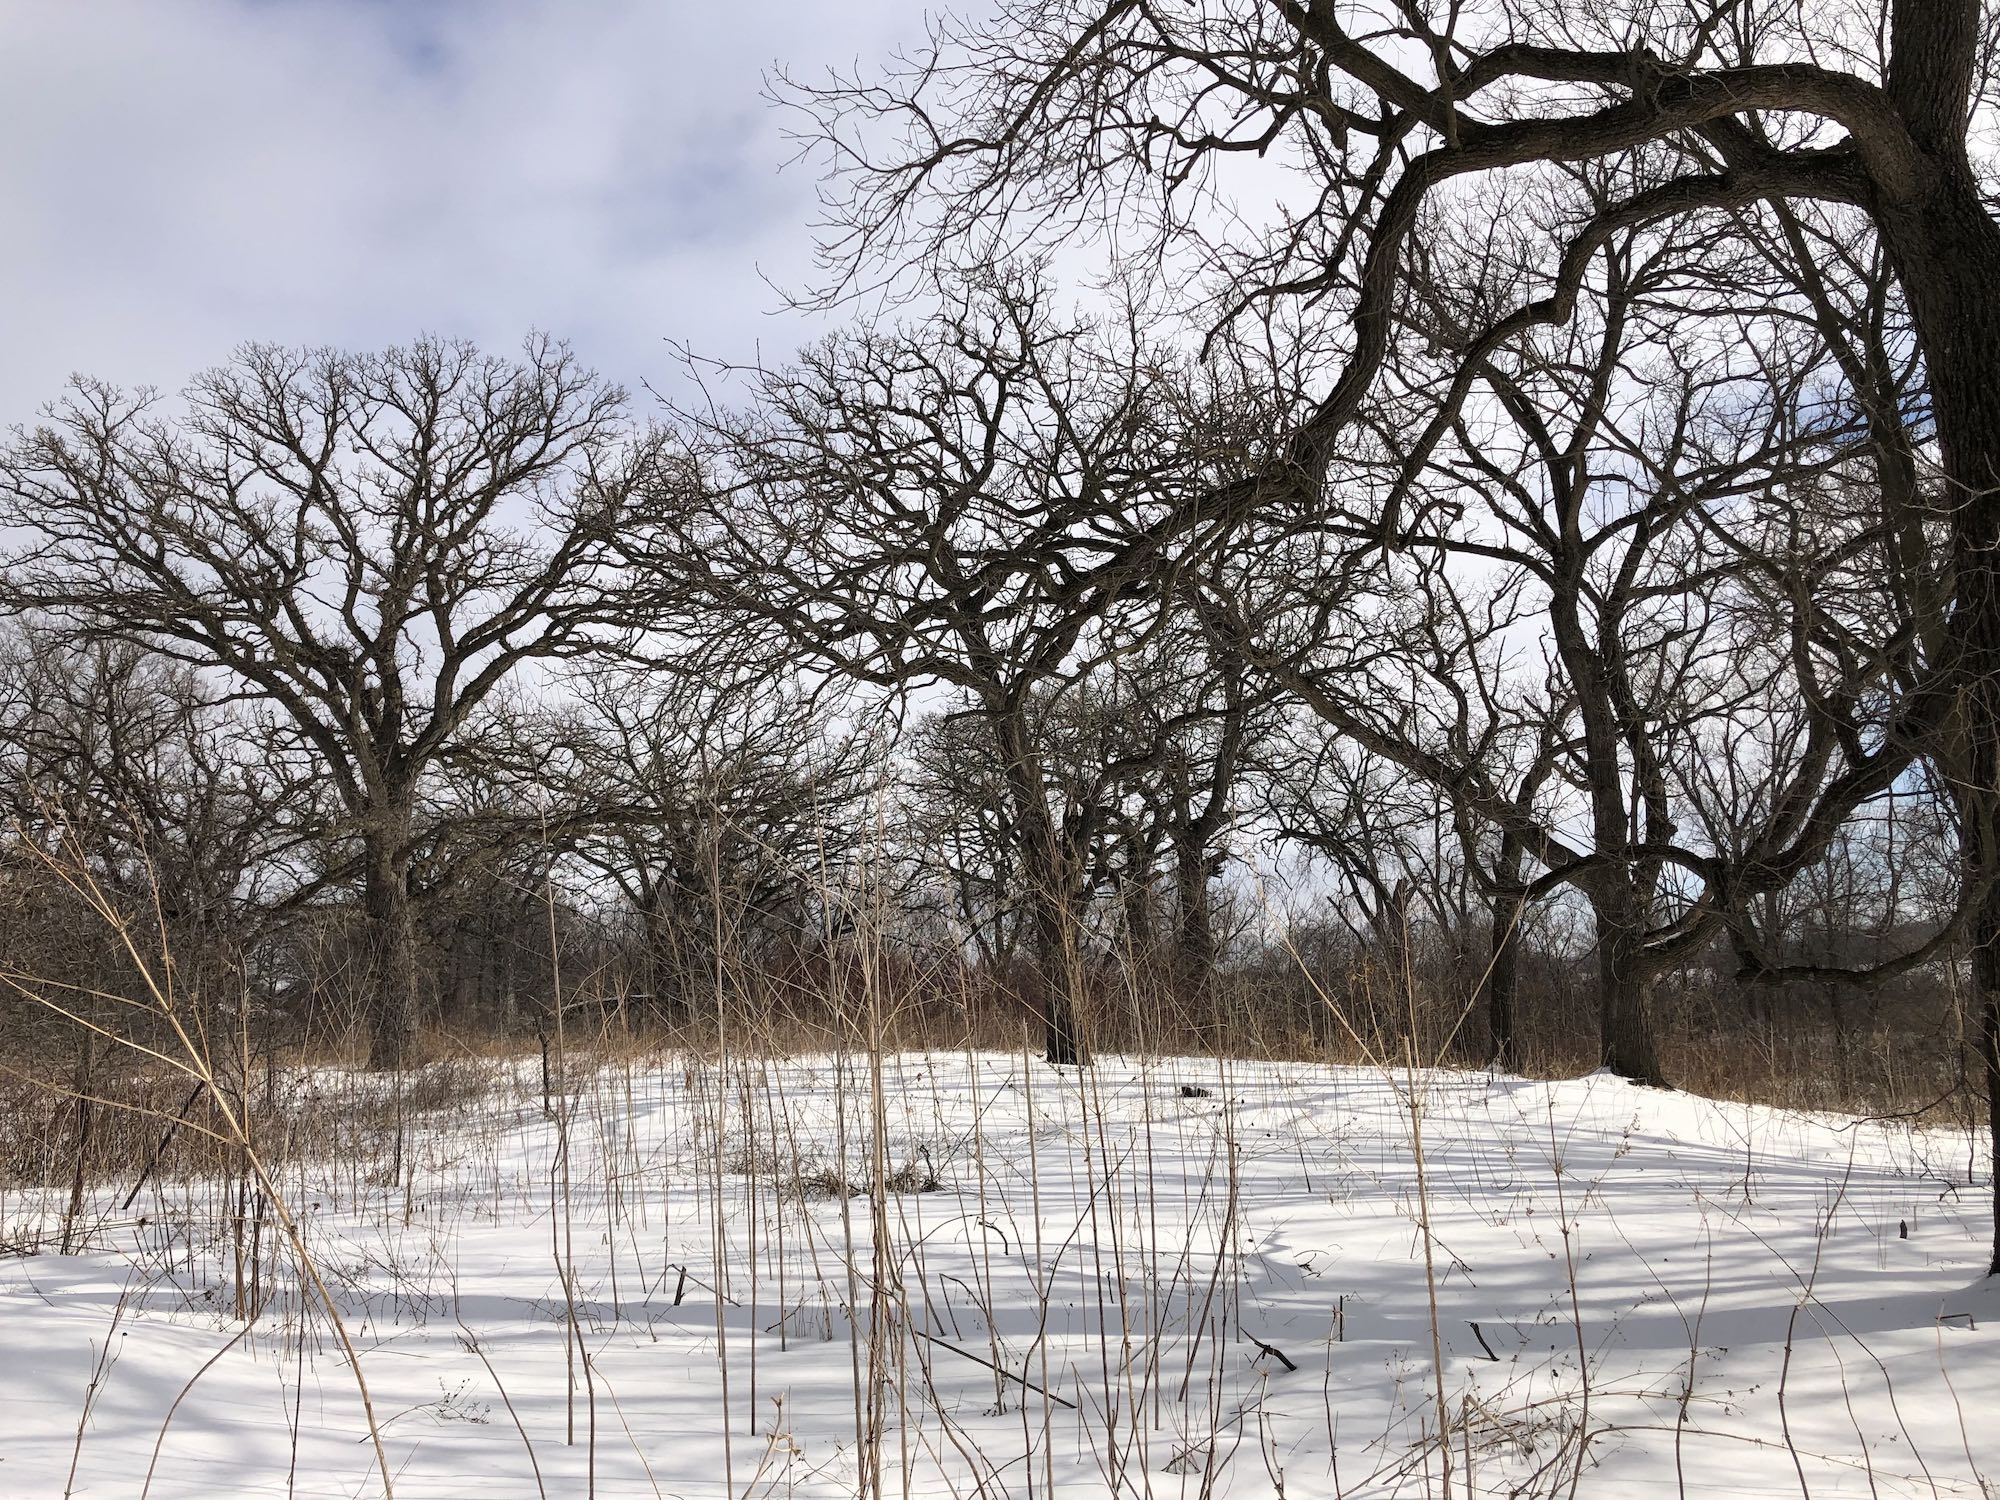 Oak Savanna on February 16, 2019 in University of Wisconsin Arboretum in Madison, Wisconsin on the north shore of Lake Wingra.